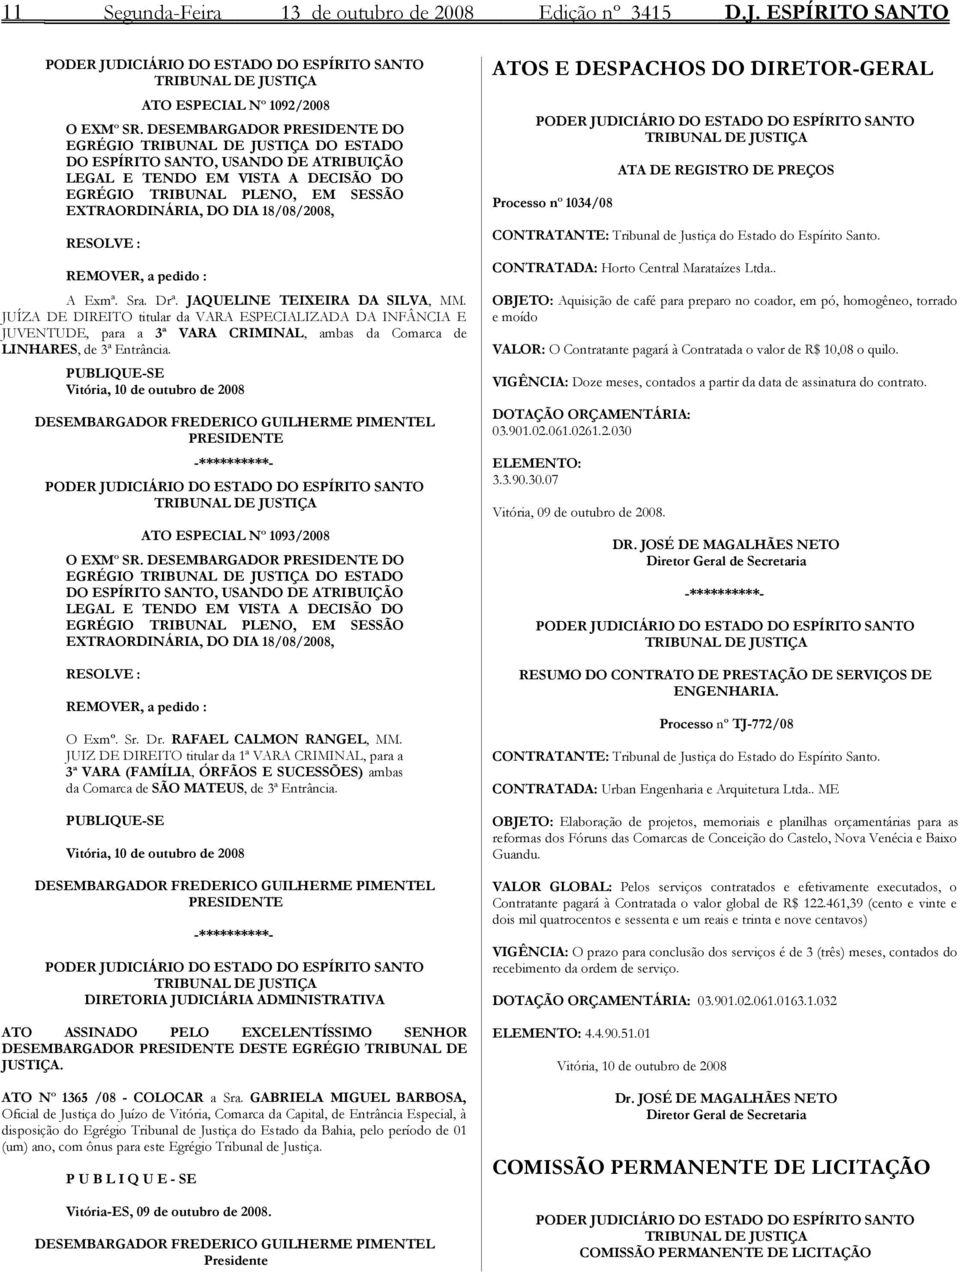 18/08/2008, RESOLVE : REMOVER, a pedido : A Exmª. Sra. Drª. JAQUELINE TEIXEIRA DA SILVA, MM.